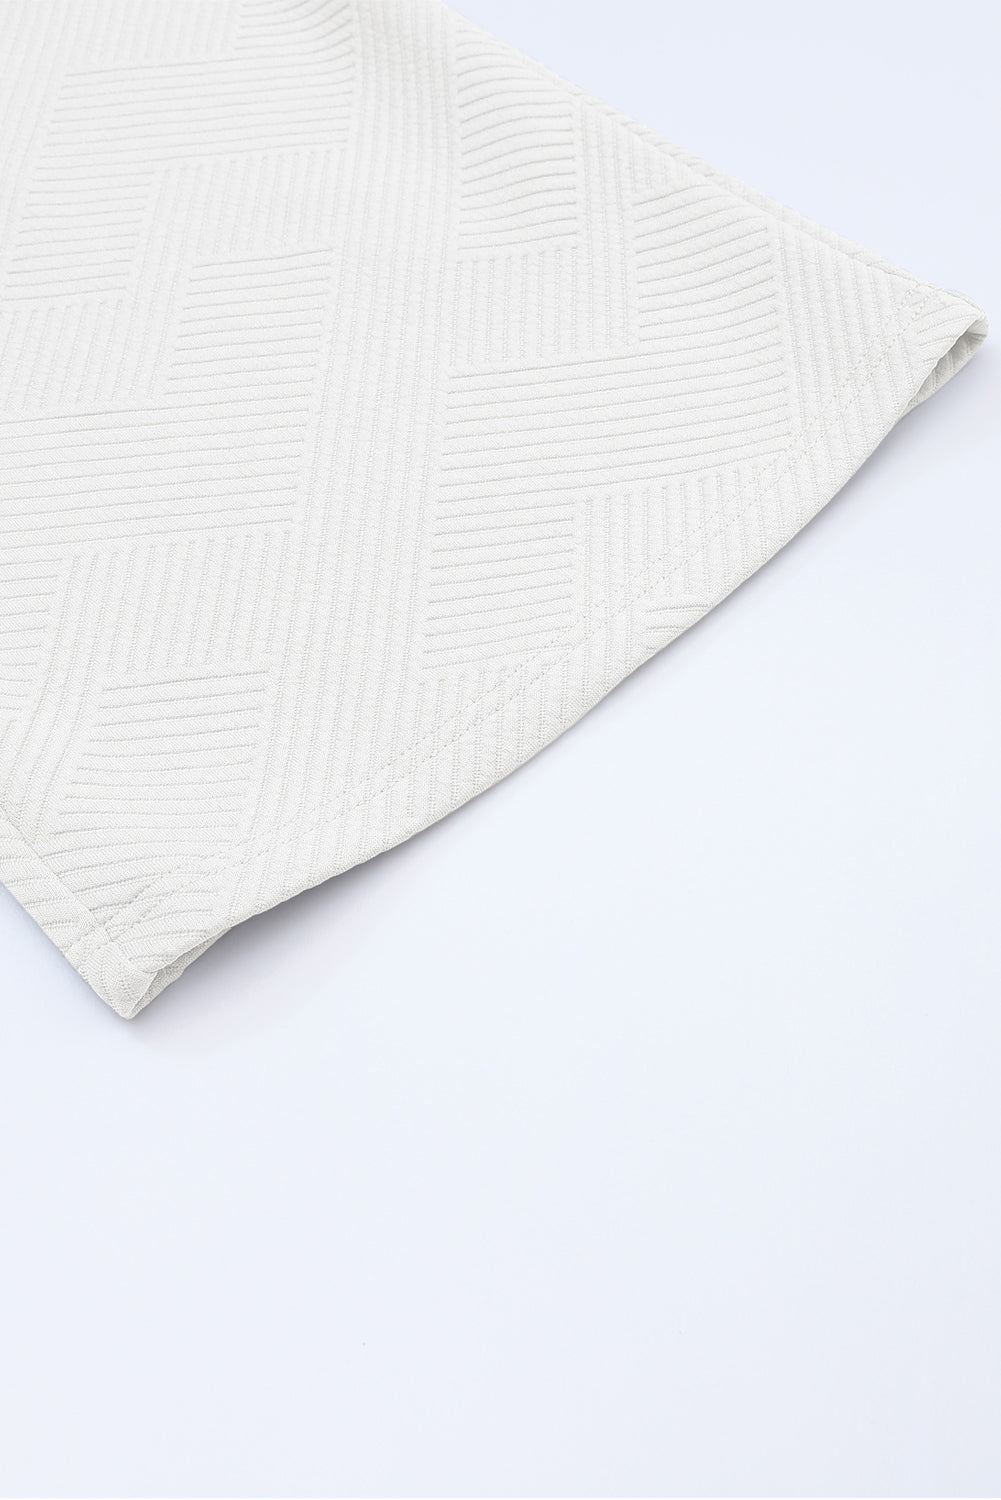 White Textured Loose Fit T Shirt and Drawstring Pants Set